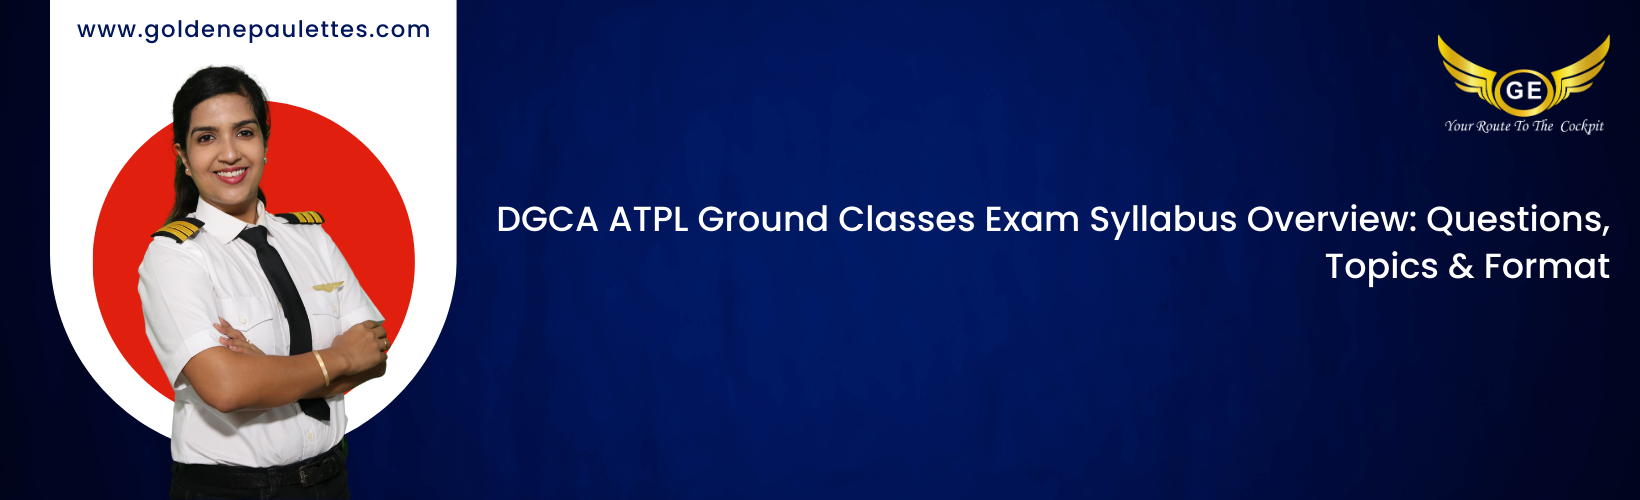 Common Mistakes to Avoid When Taking DGCA ATPL Ground Classes